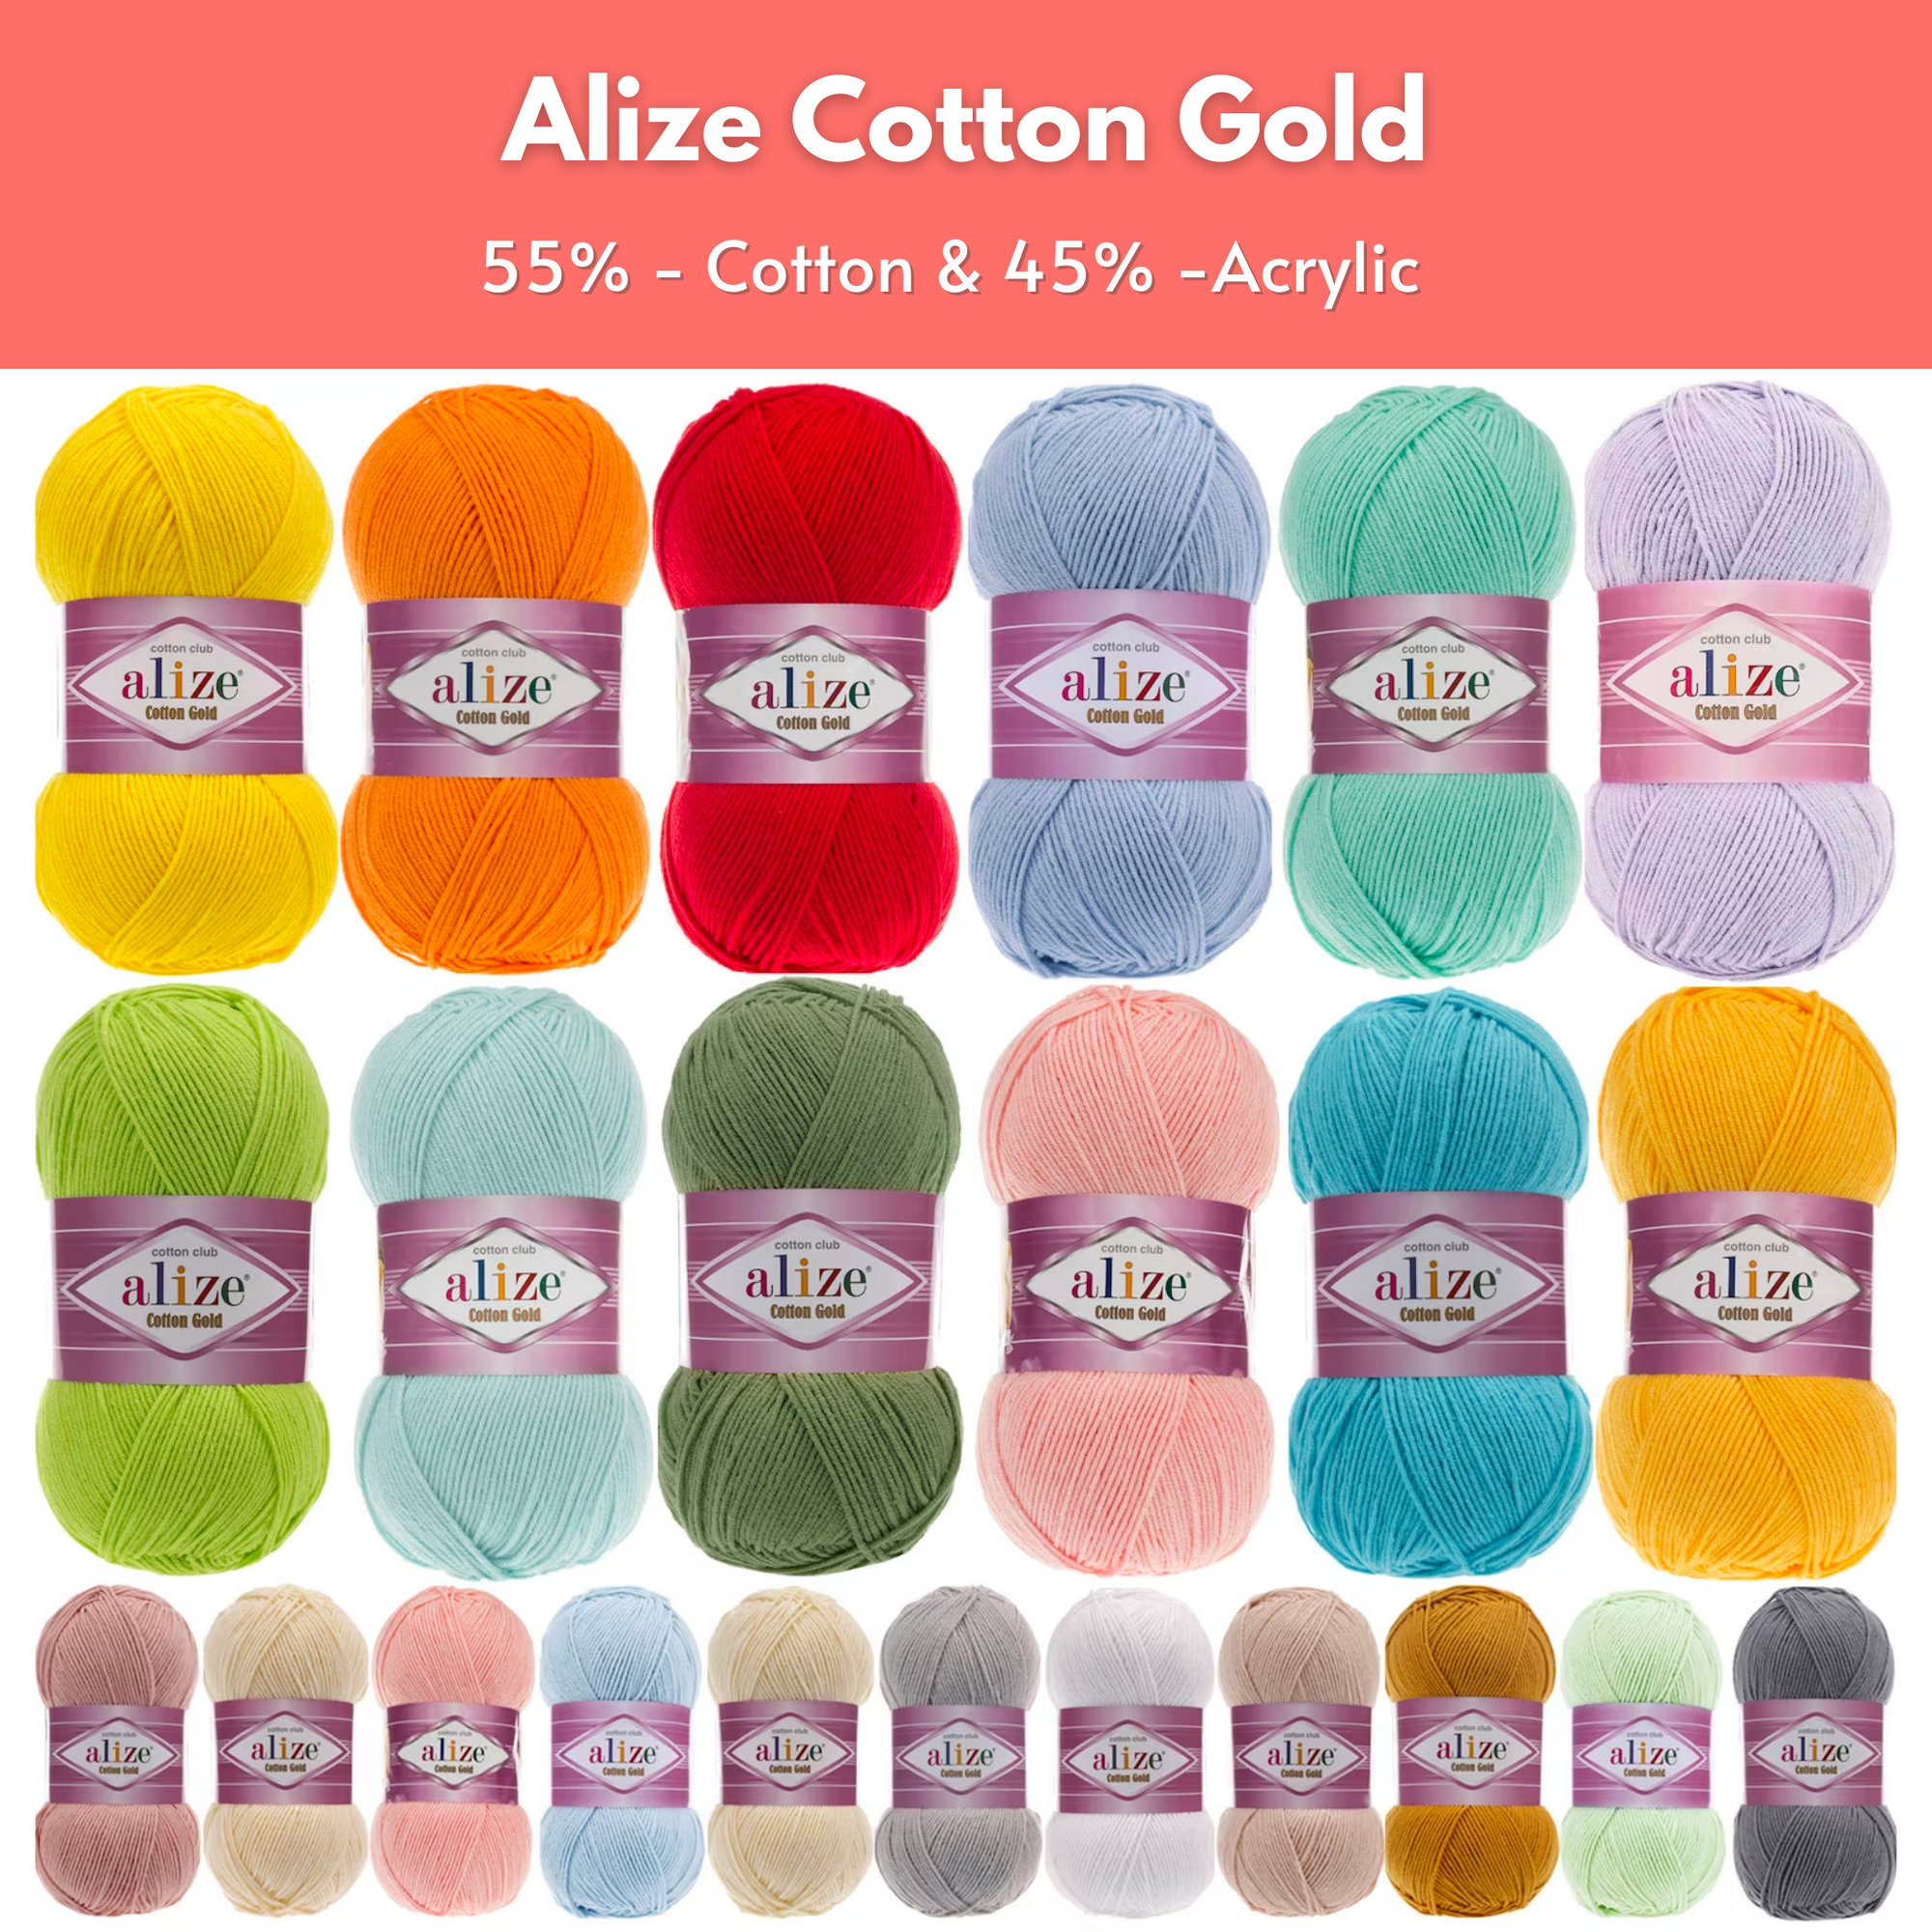 Alize Cotton Gold Knitting Yarn, Grass Green - 35